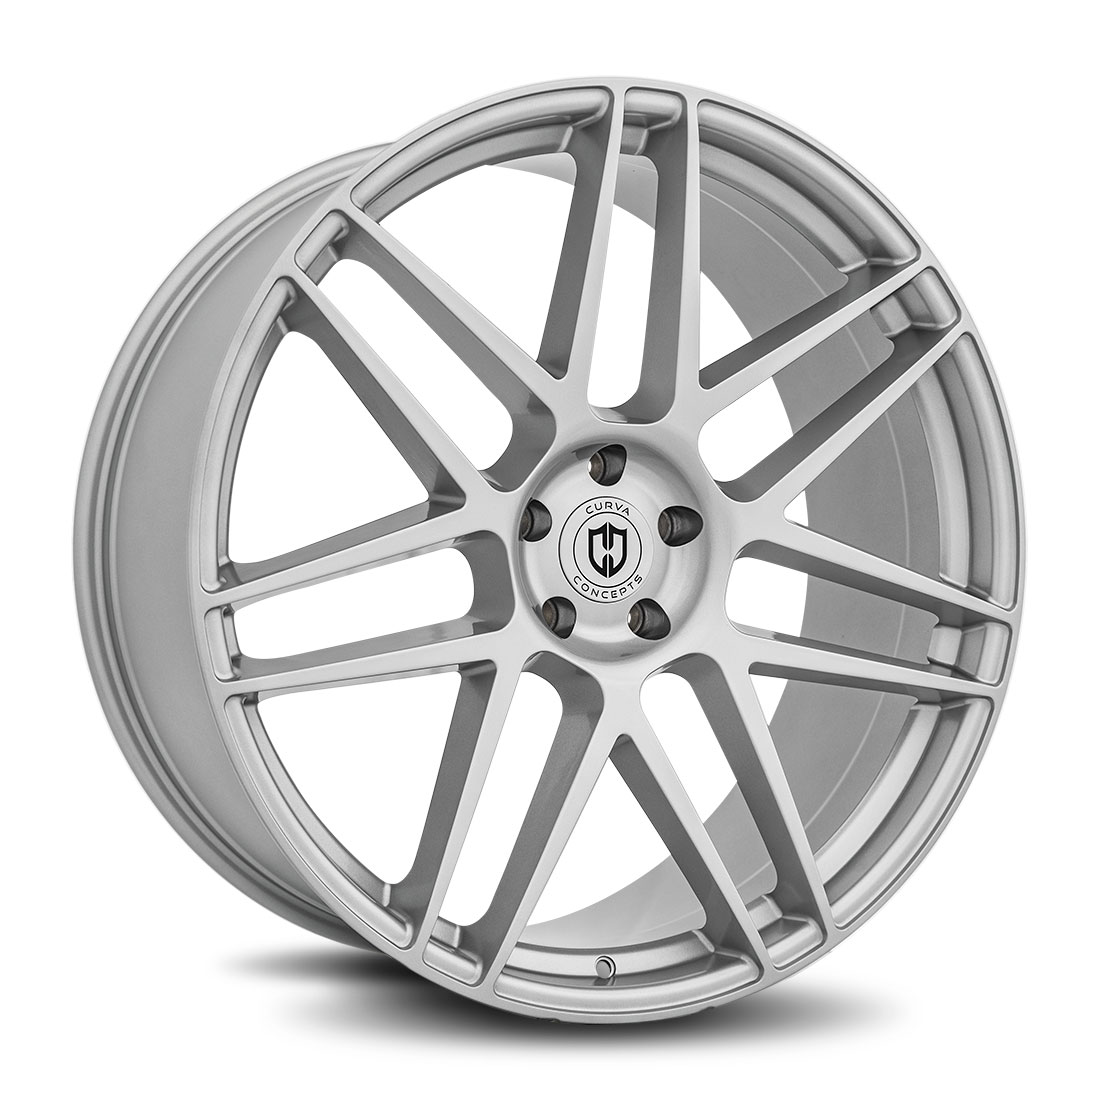 Curva Concepts C300 24 Inch Silver Aftermarket Wheels